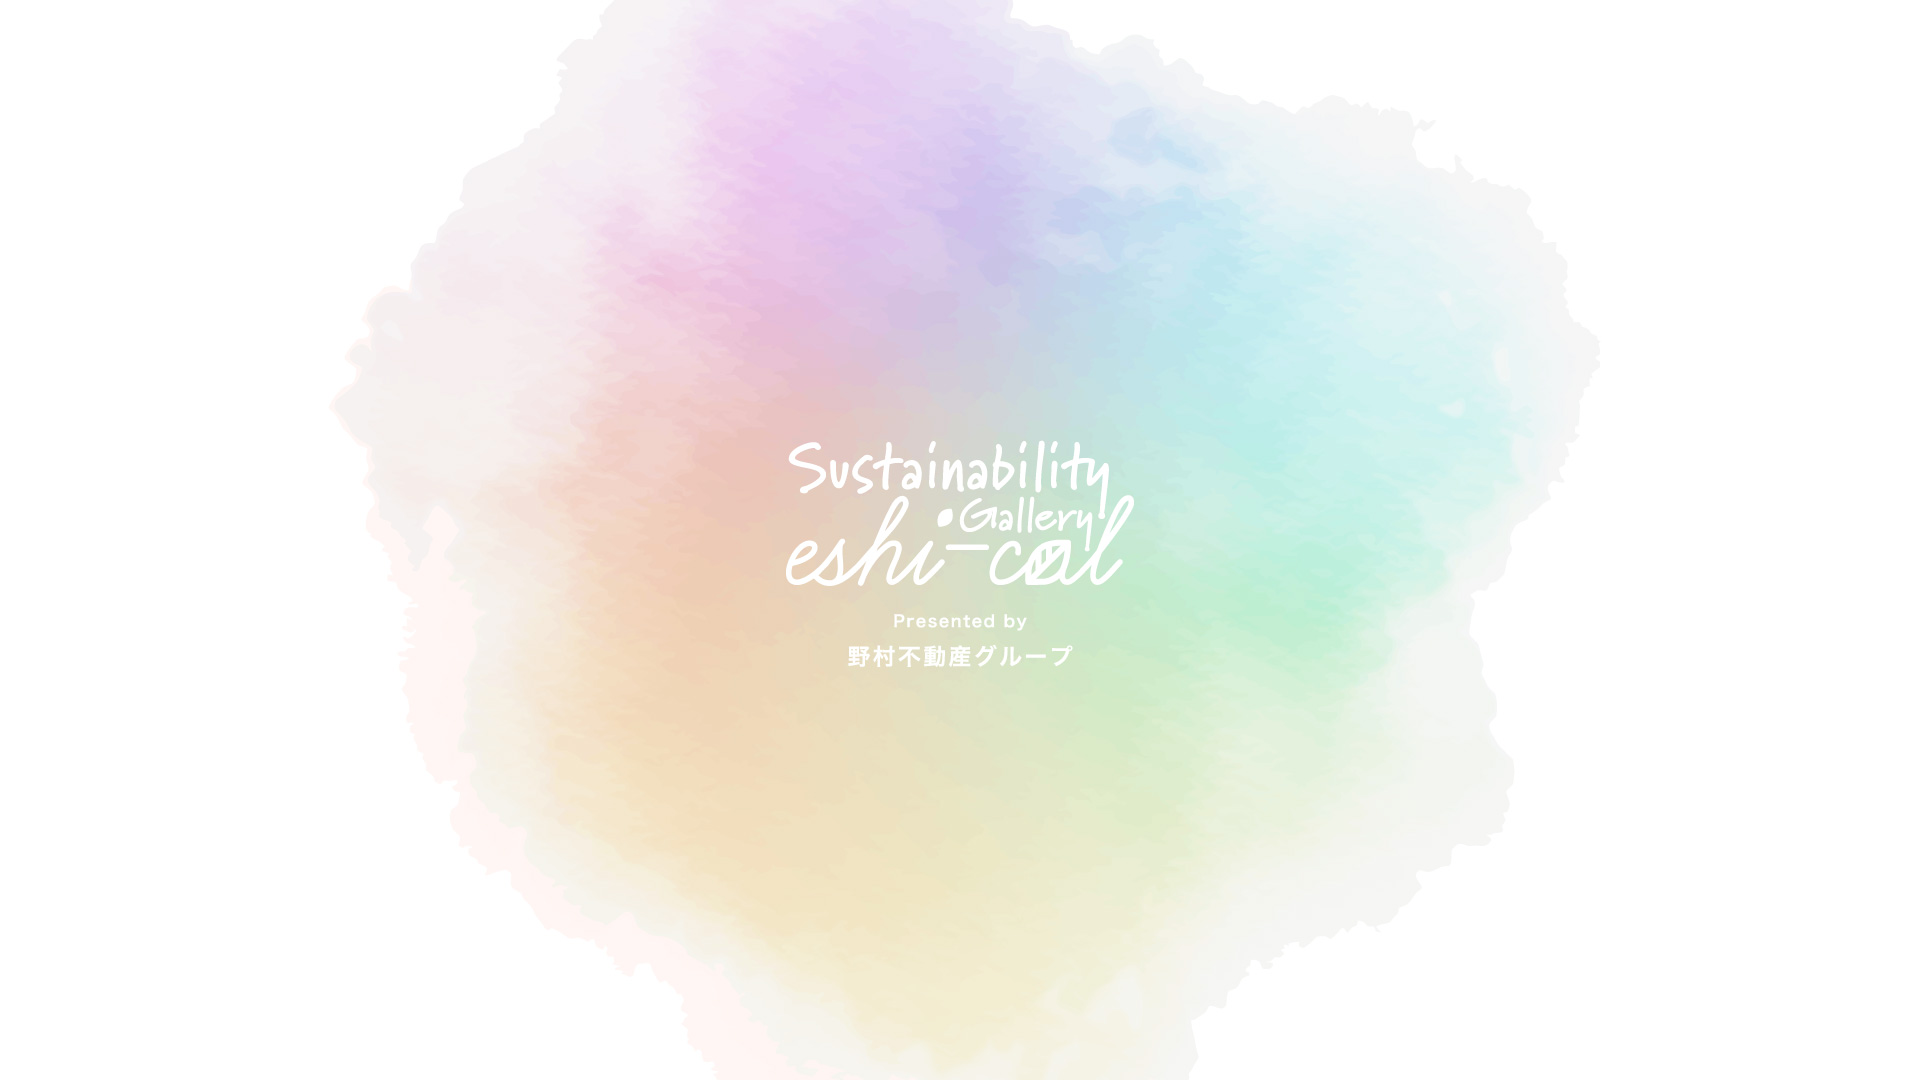 Sustainability Gallery eshi-cal